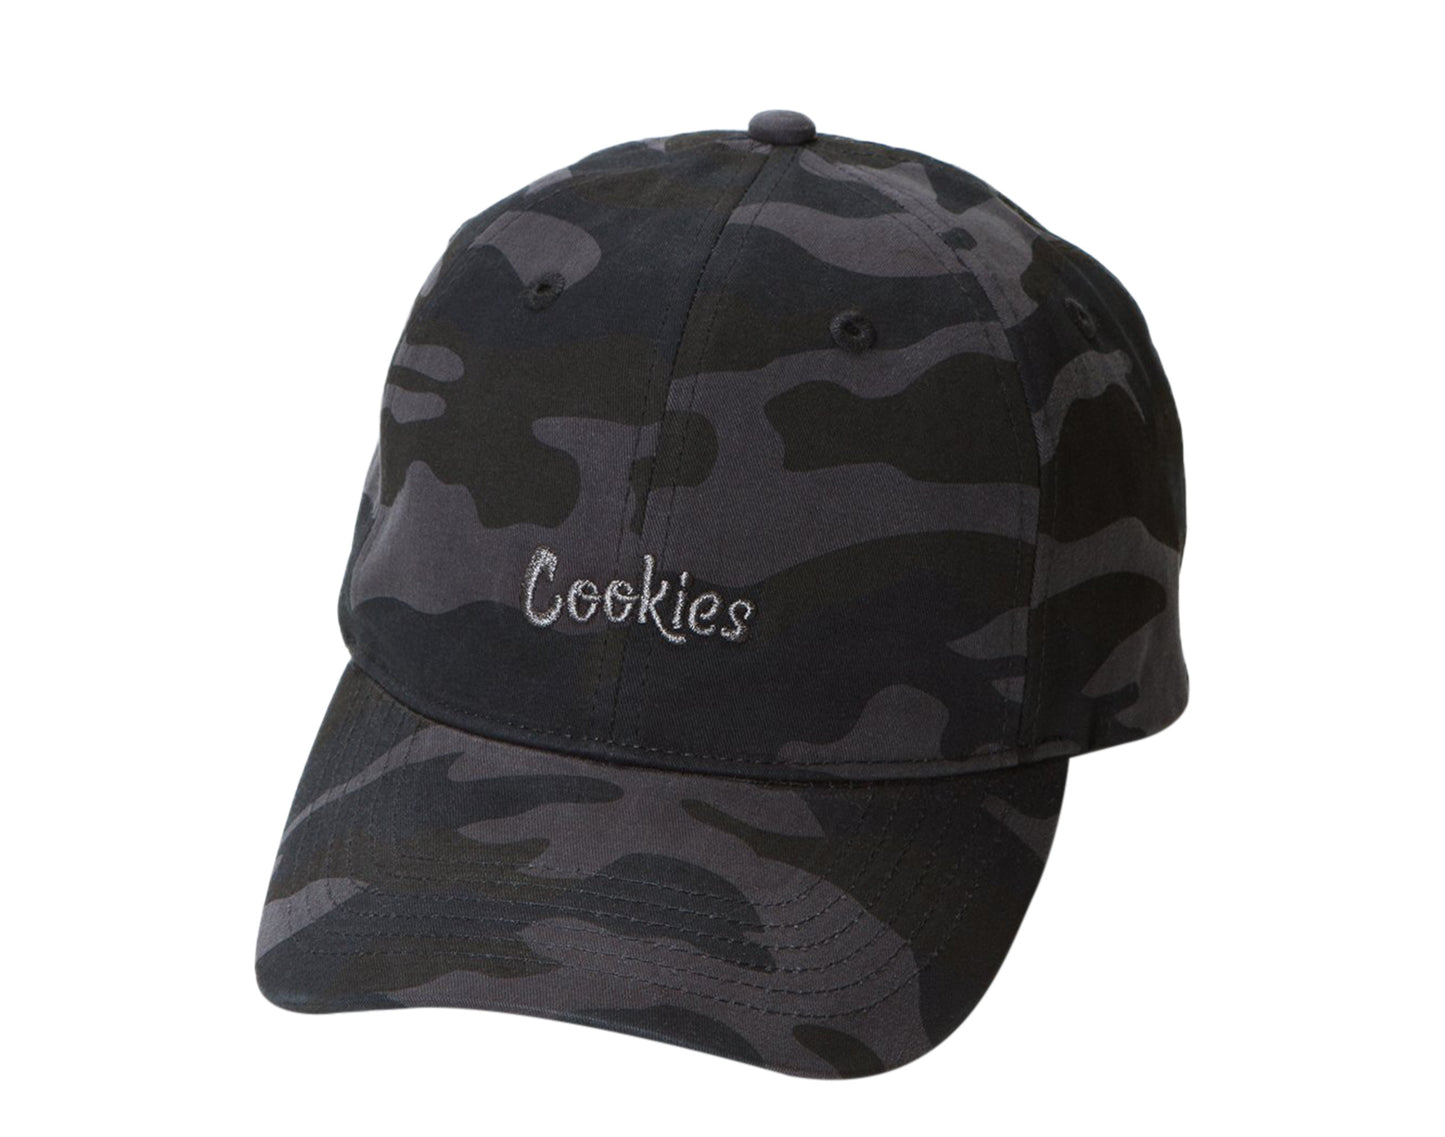 Cookies Original Logo Thin Mint Black Camo/Charcoal Dad Hat 1546X4389-BKC